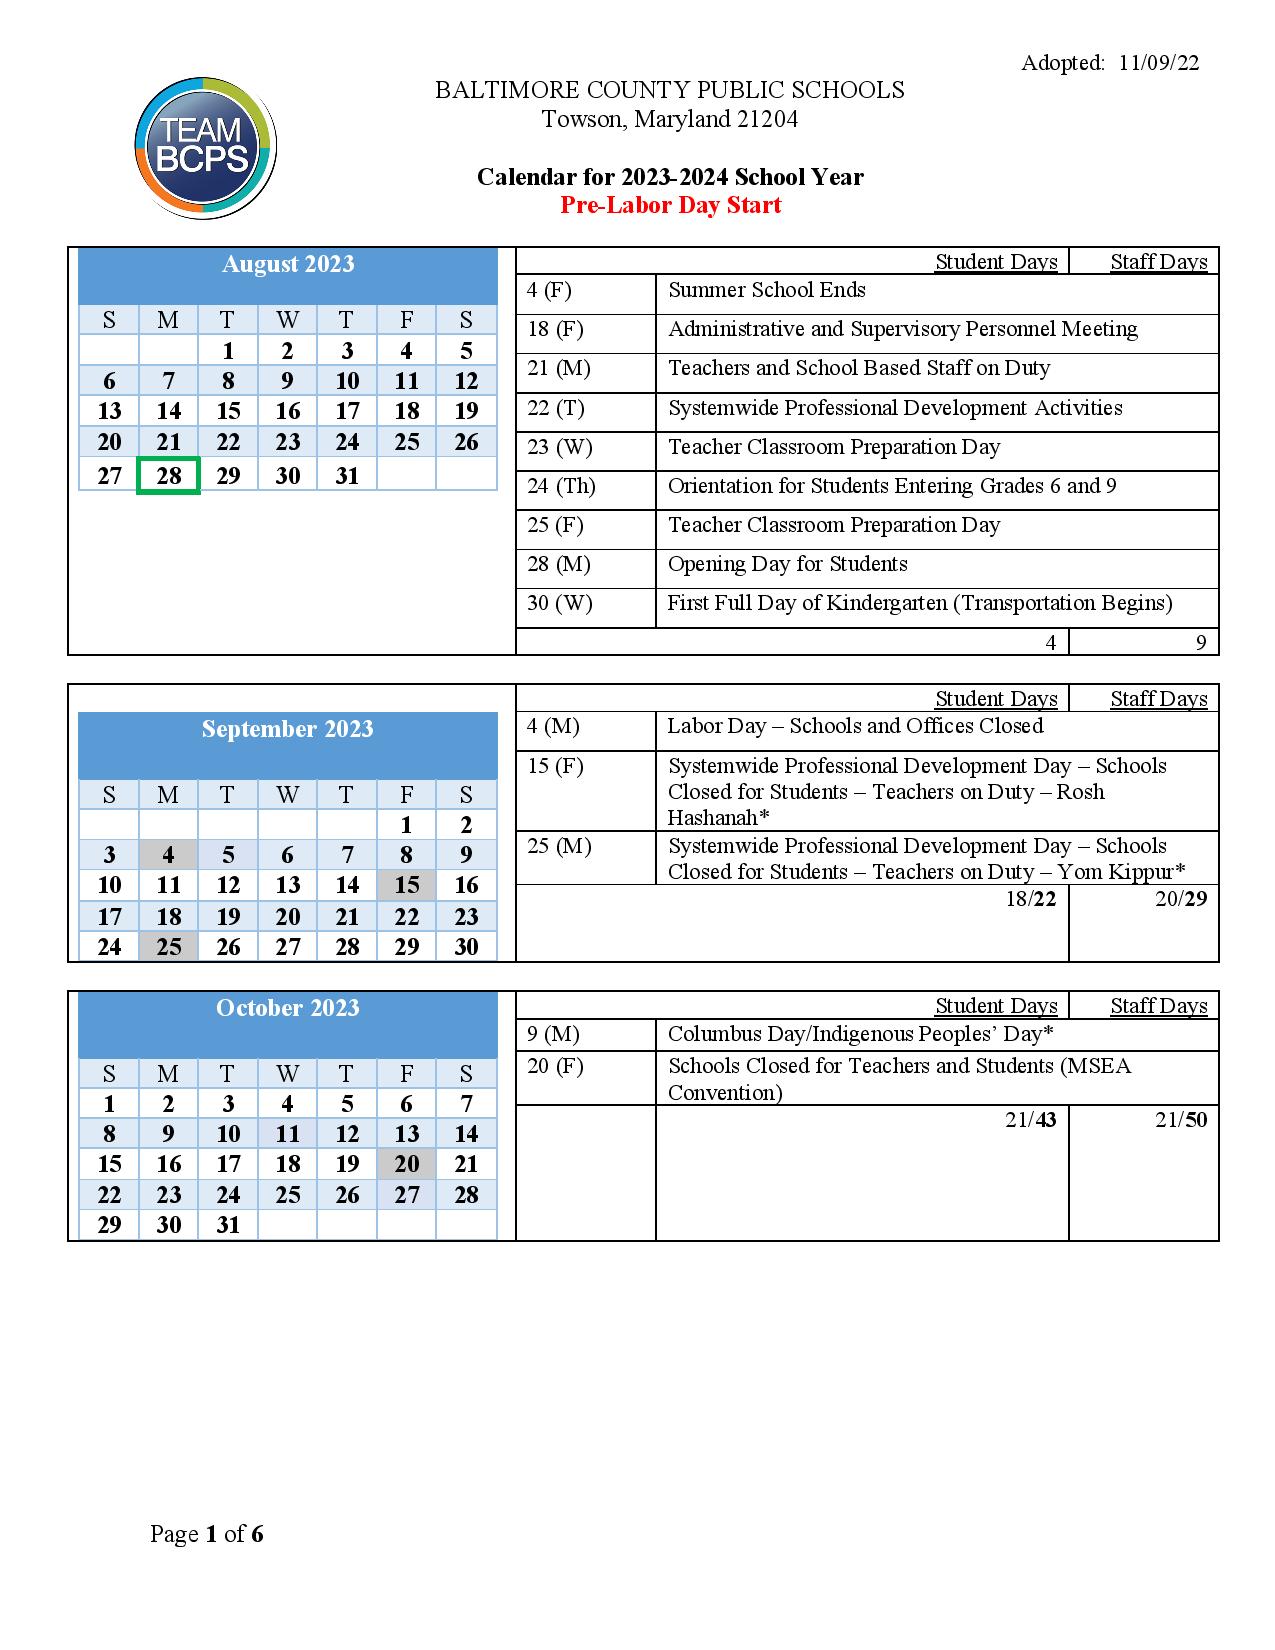 southern-utah-university-fall-2023-calendar-2023-cool-awasome-list-of